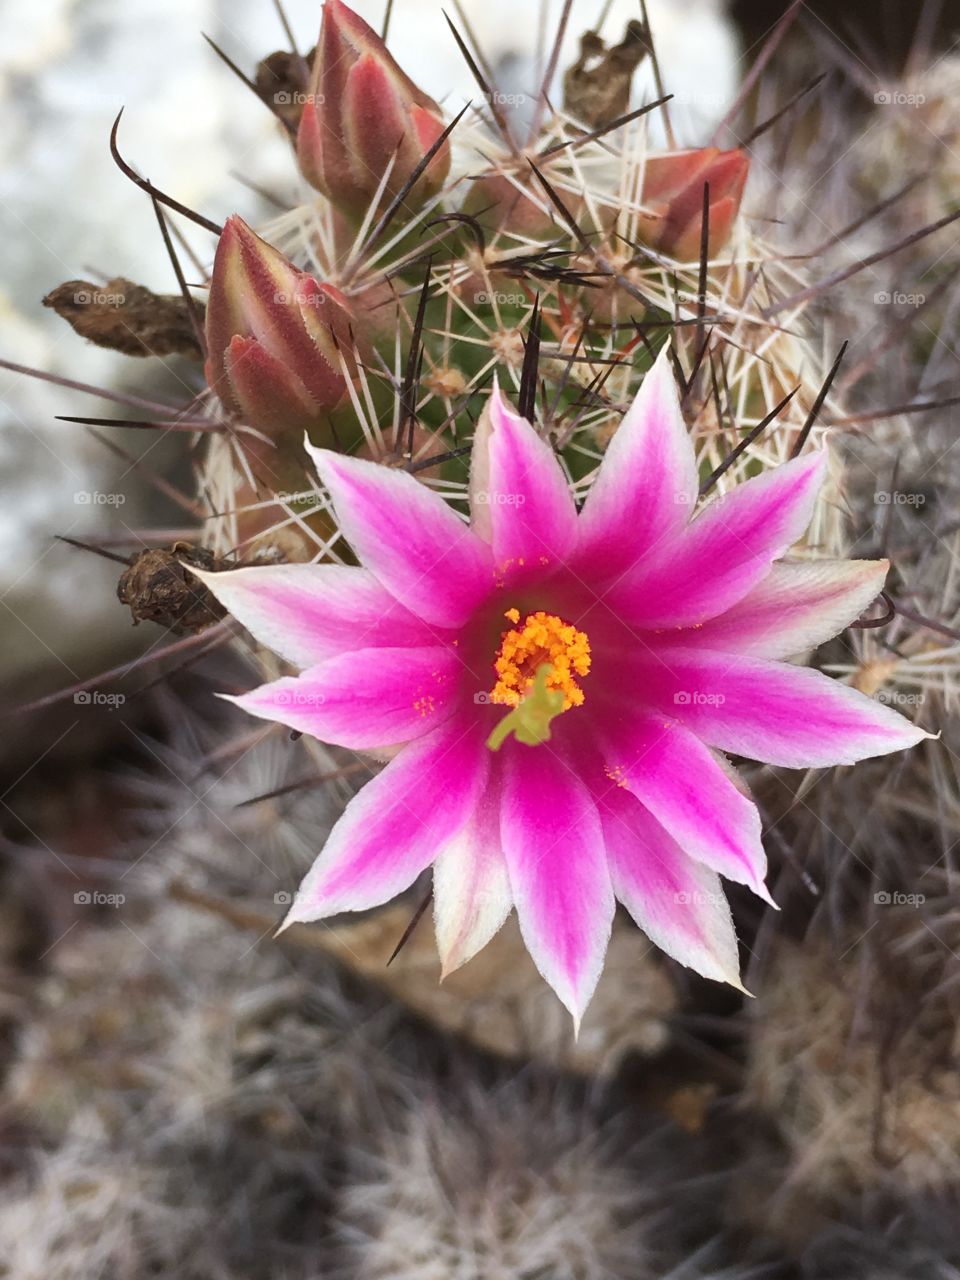 Little cactus flower